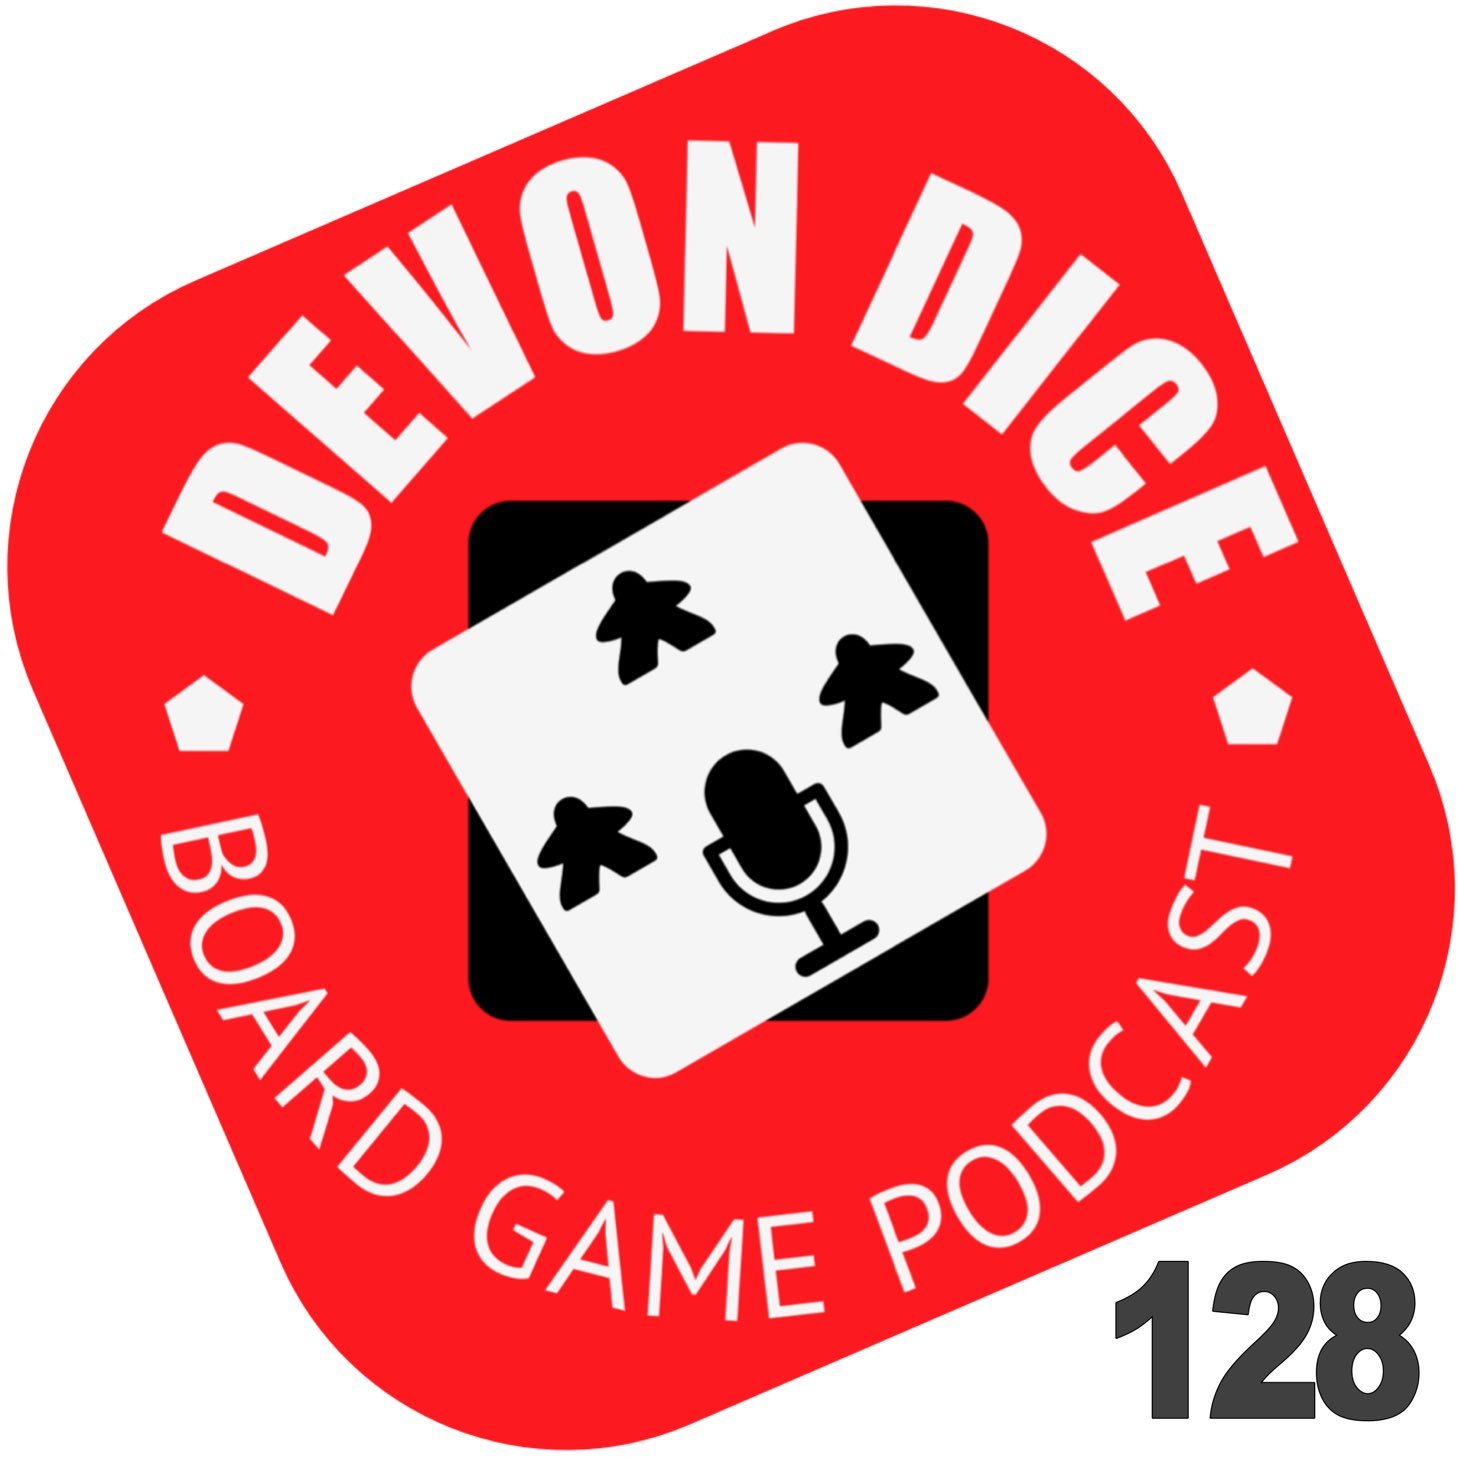 128 Devon Dice Podcast News-a-Palooza Show - Free the Meeples